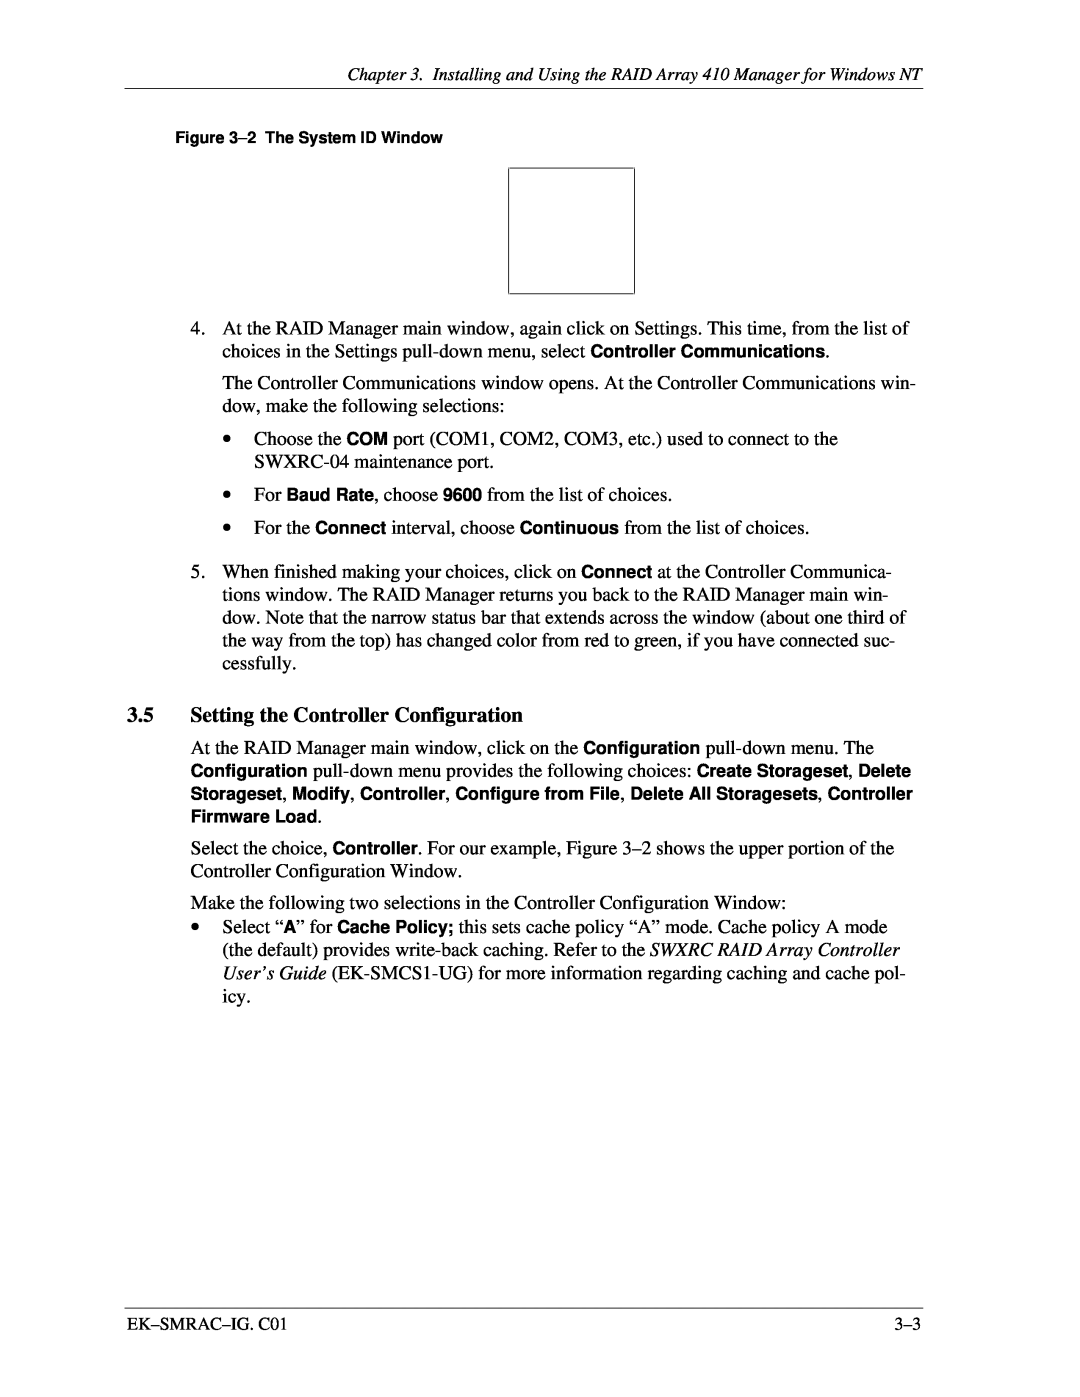 Intel 410 manual 3.5Setting the Controller Configuration 